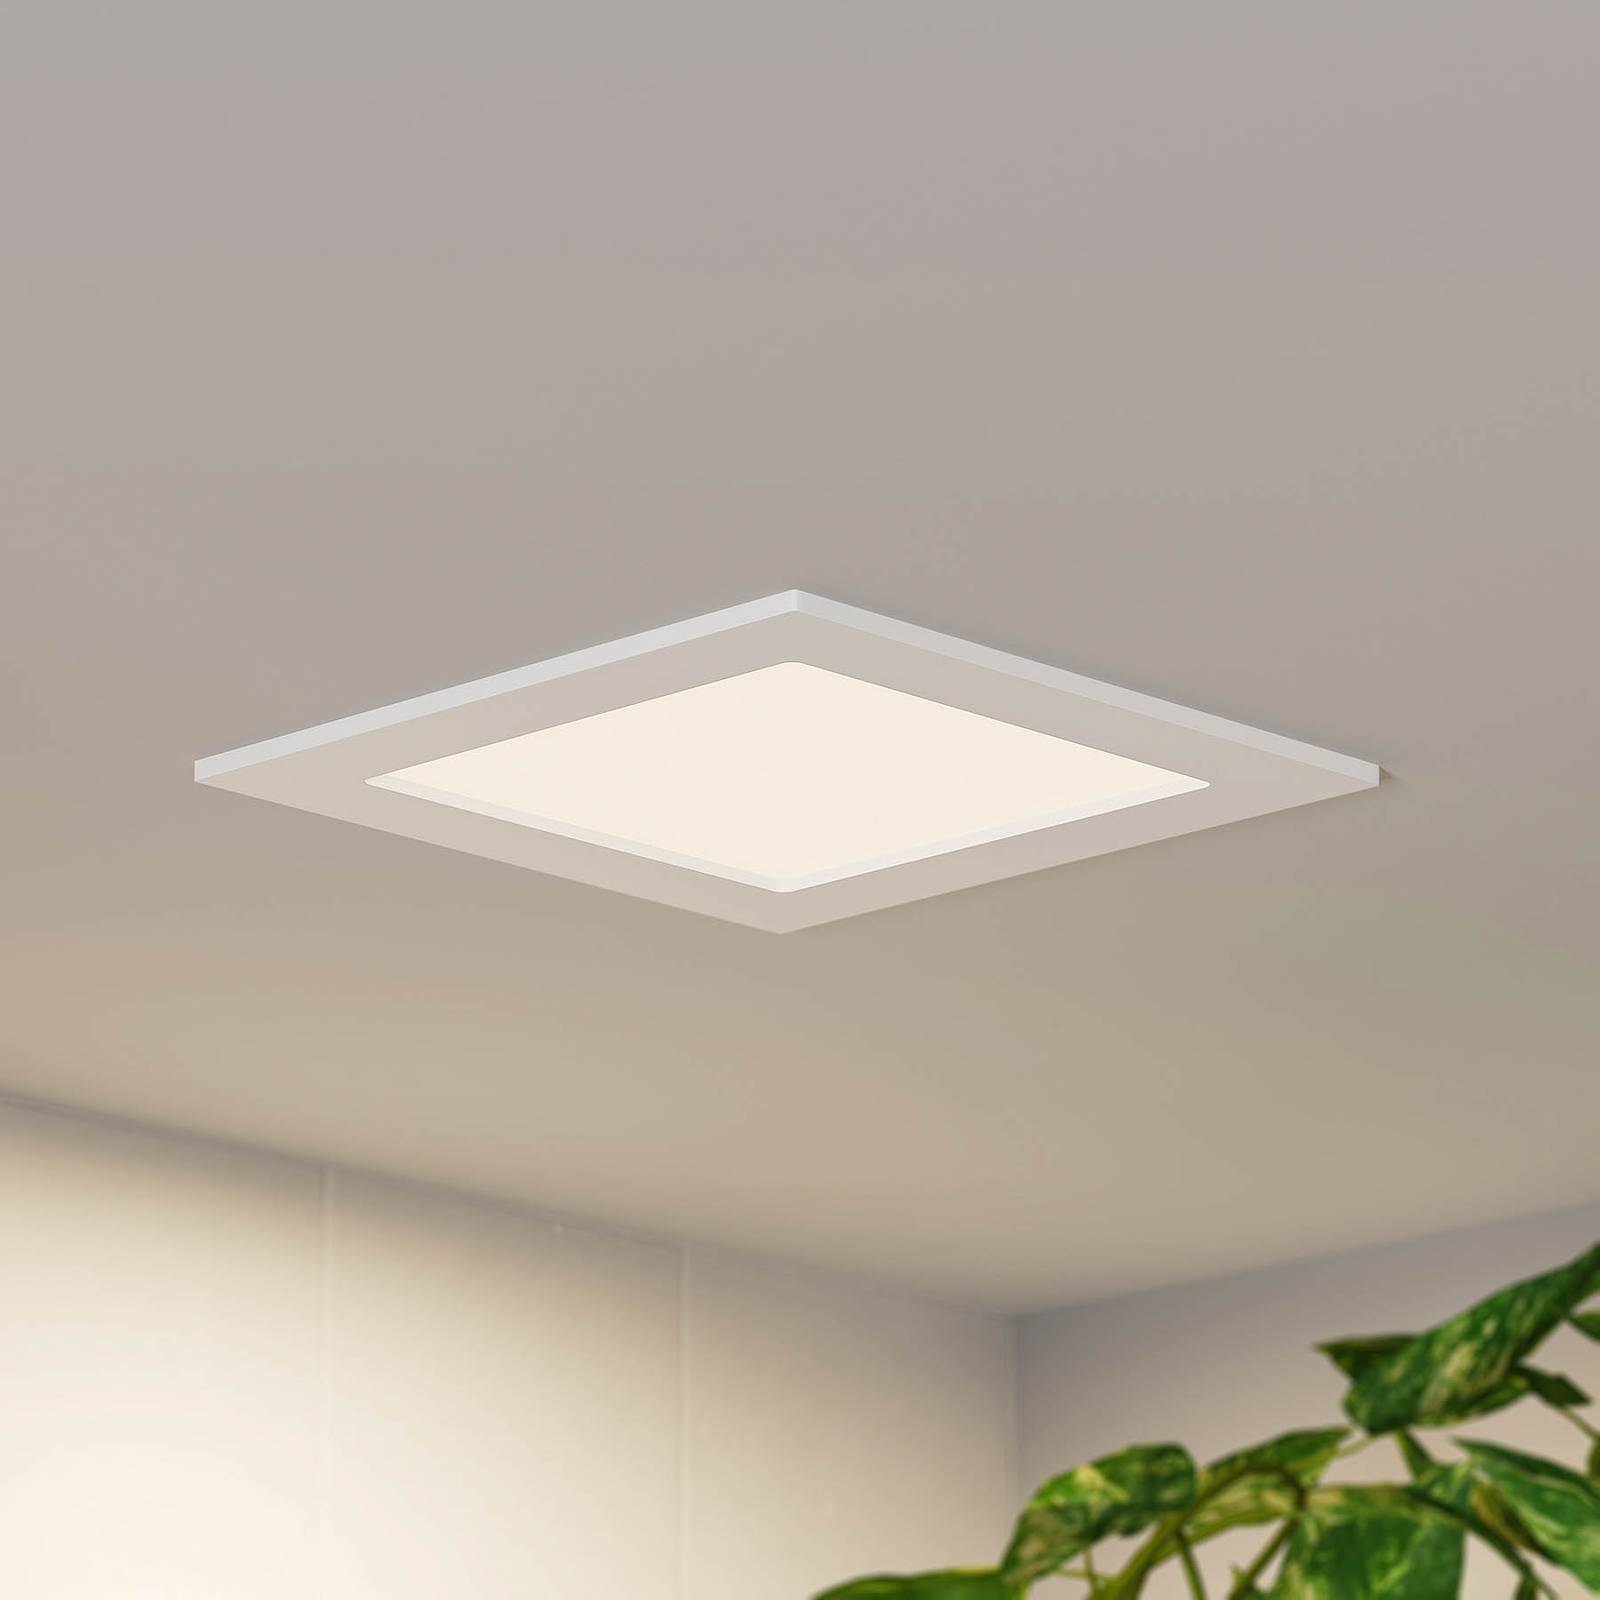 Image of Prios Helina lampe encastrée LED, blanche, 16,5 cm 4251911707465